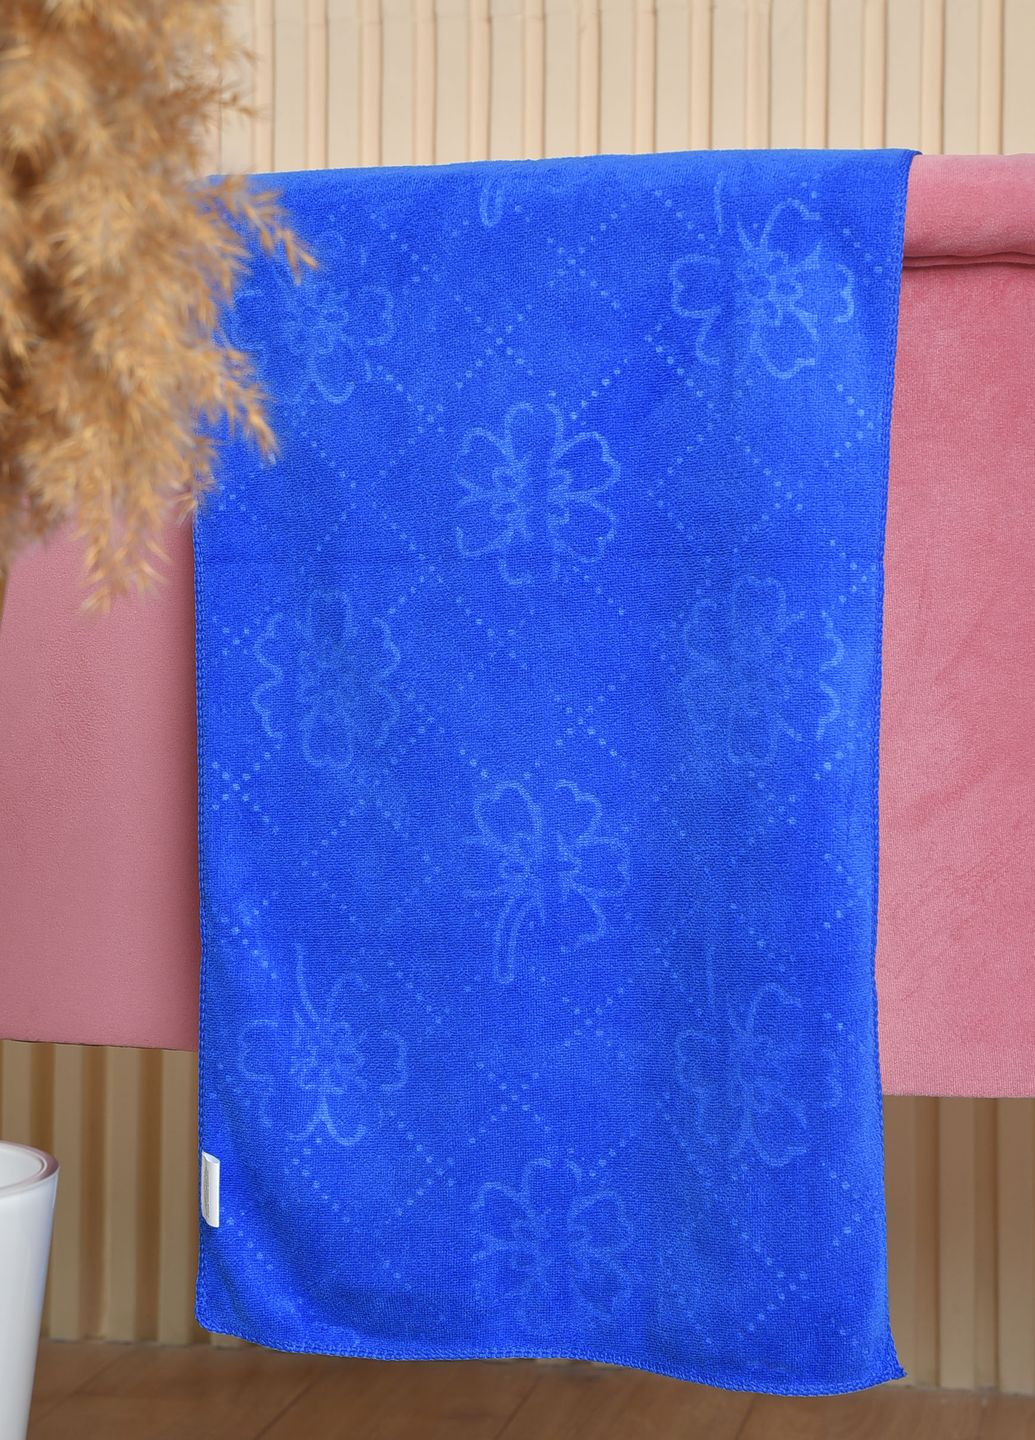 Let's Shop полотенце кухонное микрофибра синего цвета однотонный синий производство - Китай